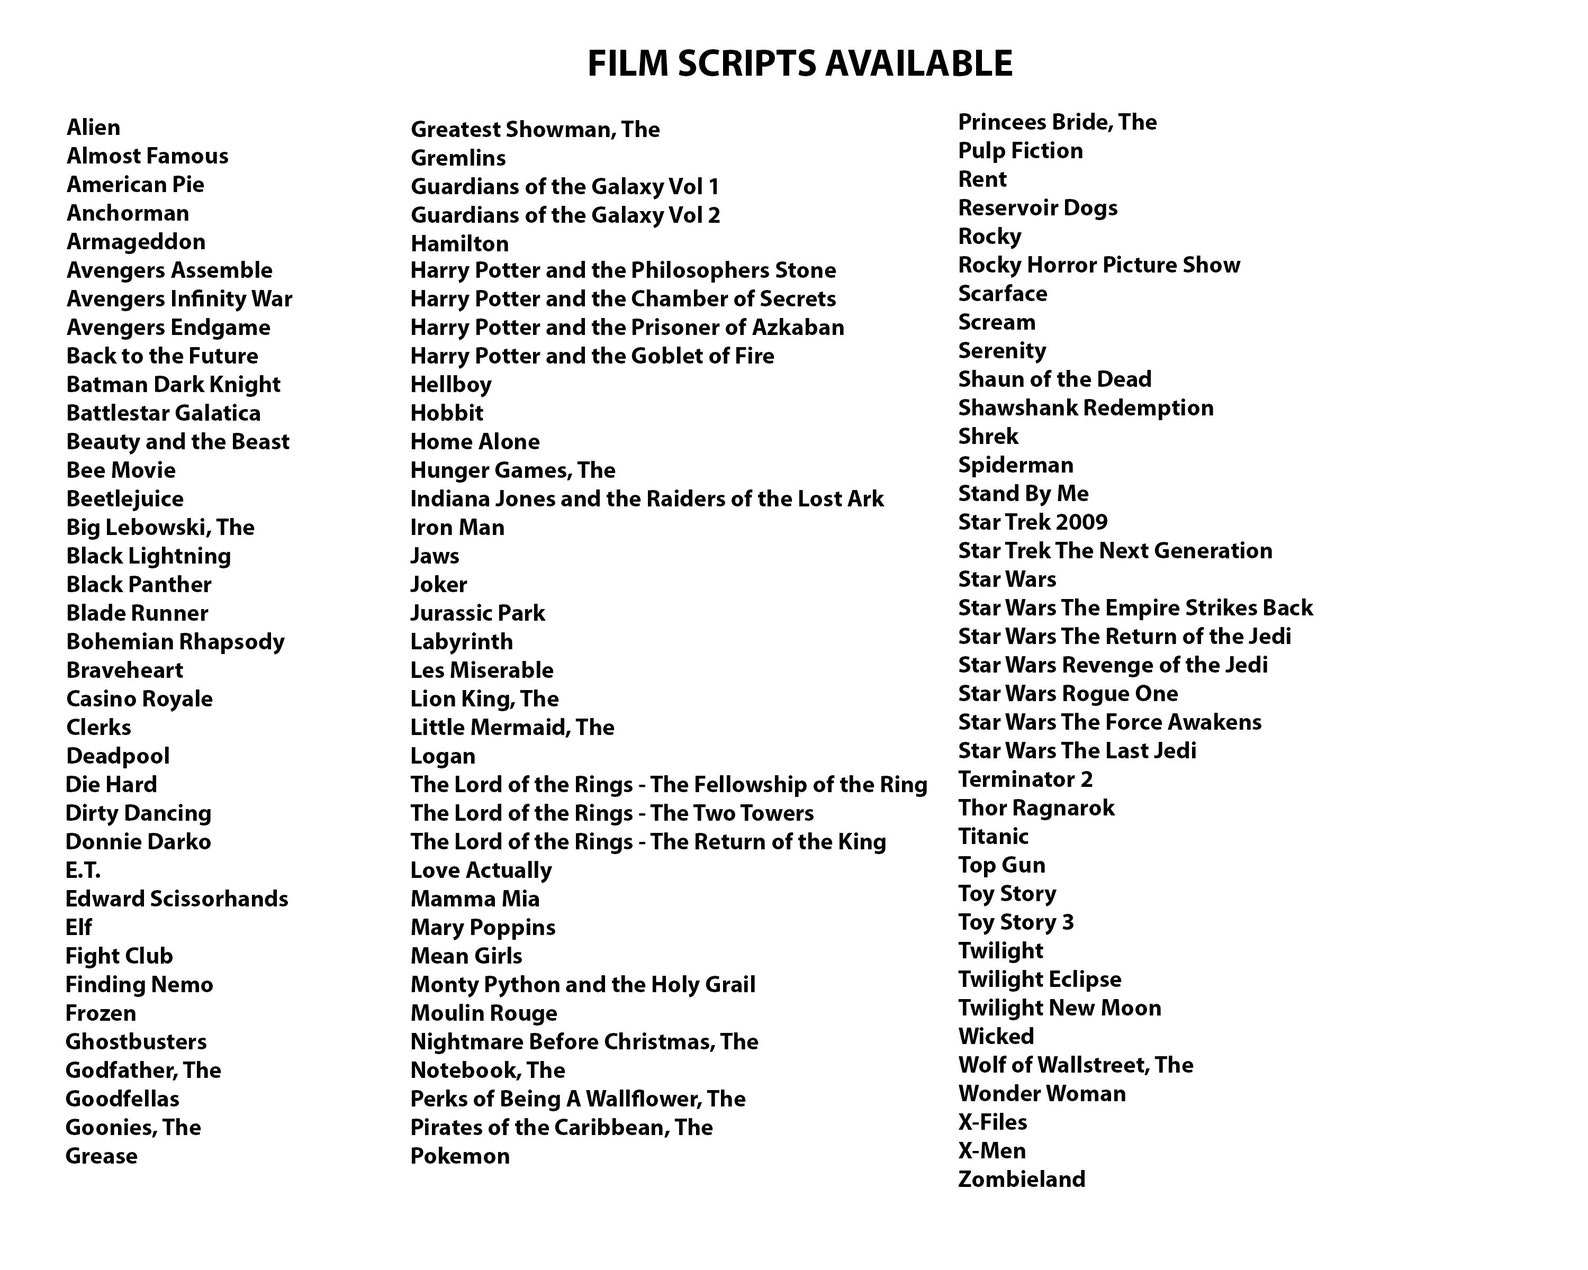 Movie scripts